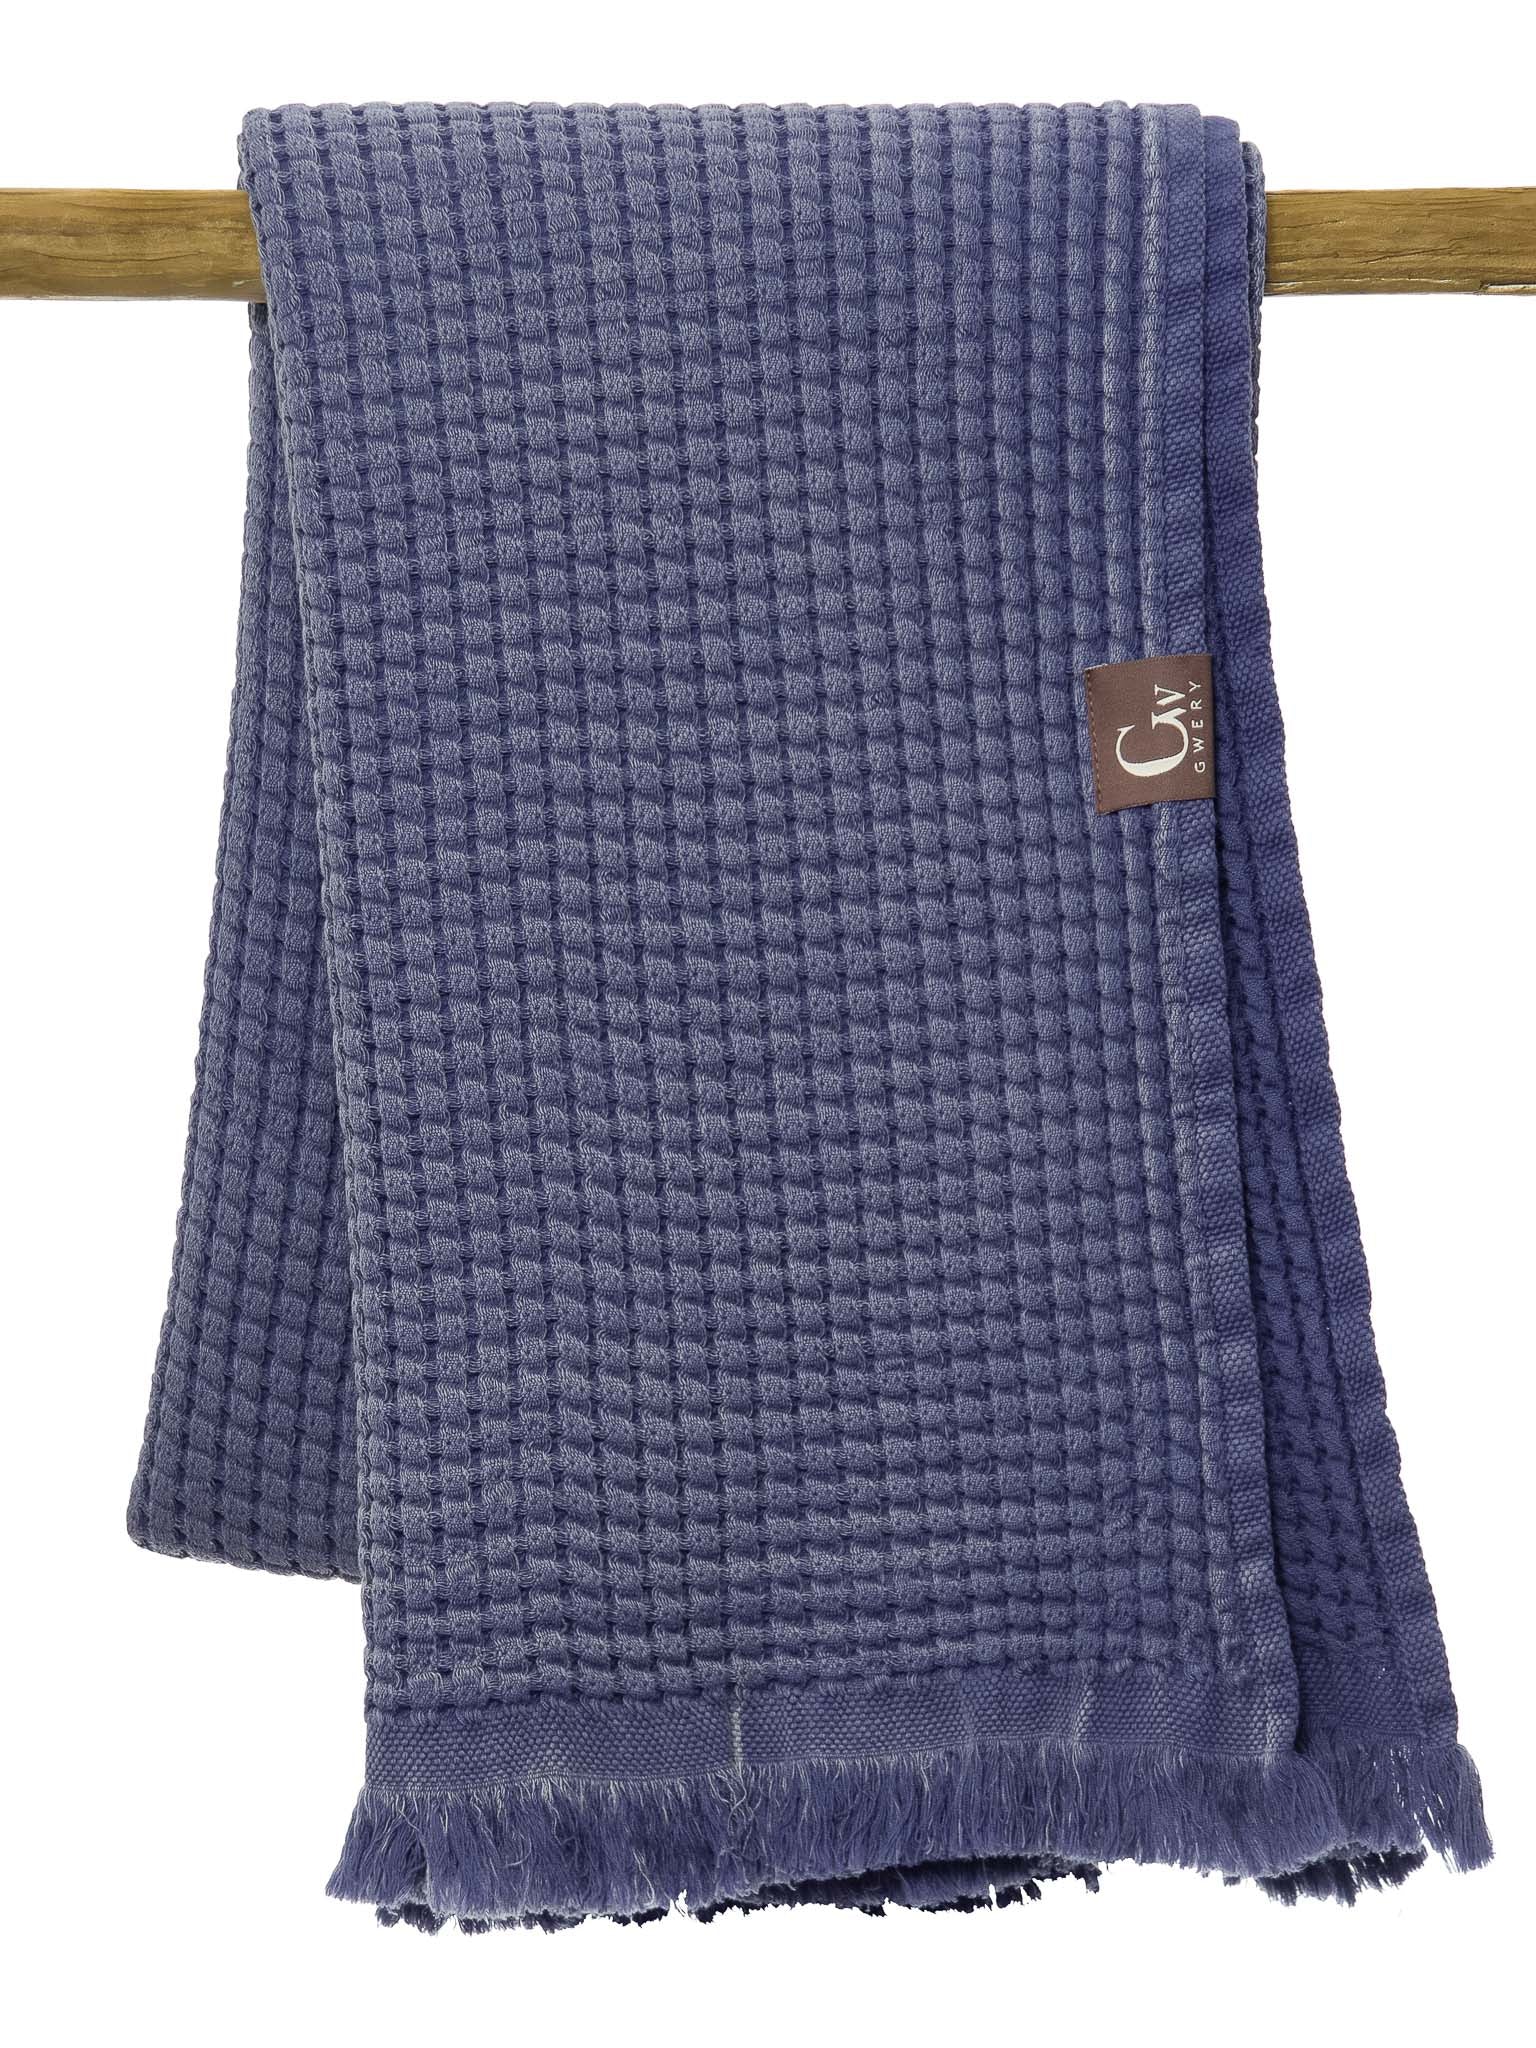 Blue double sided, honeycomb beach towel folded